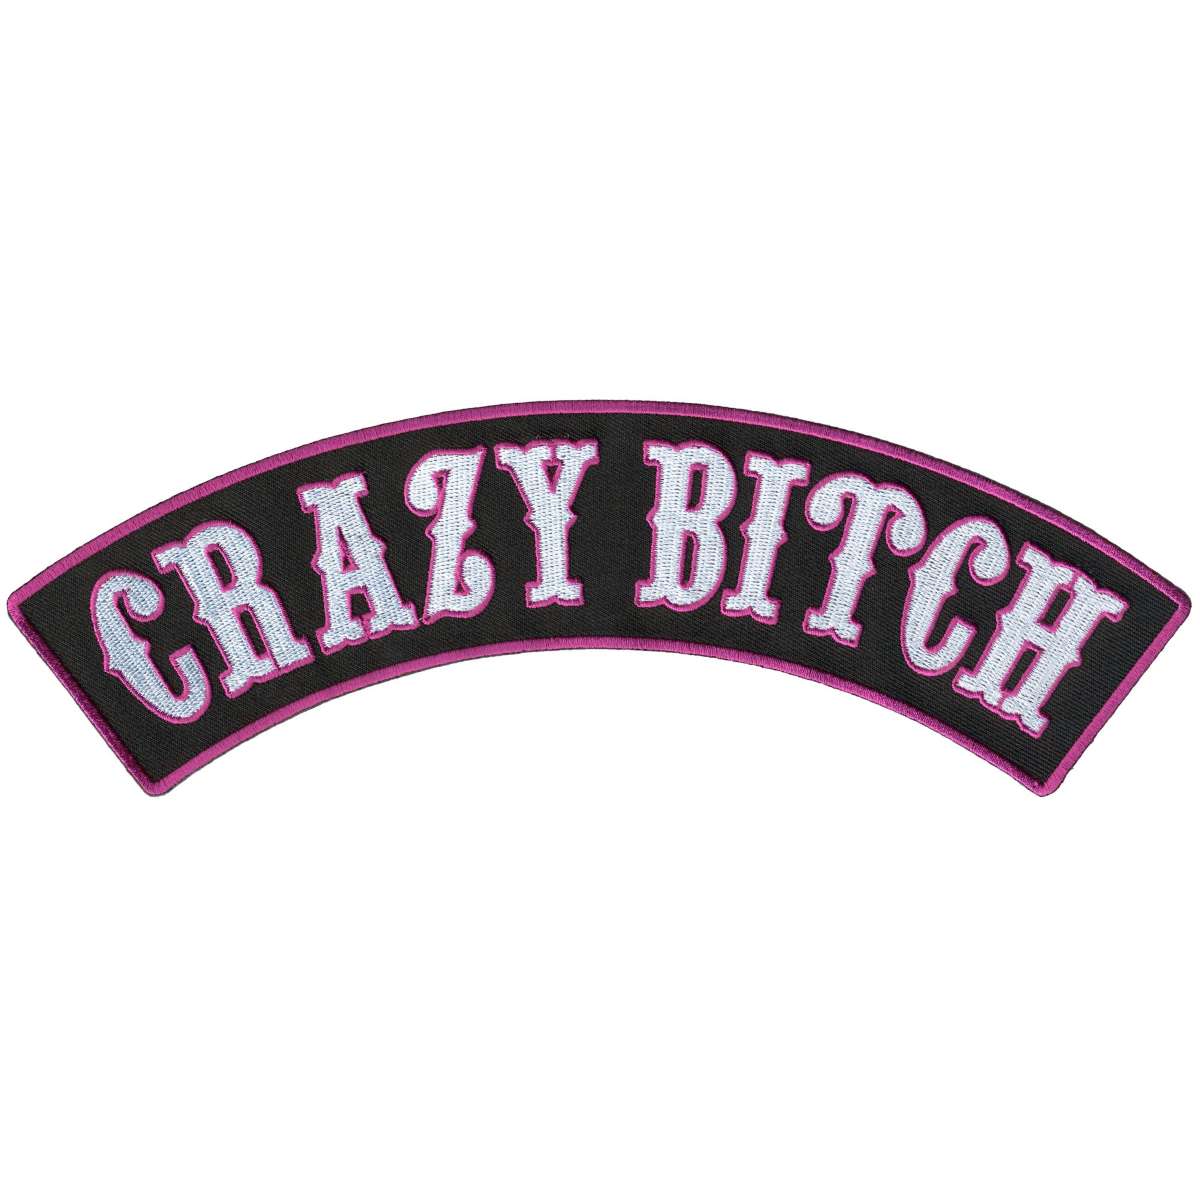 Hot Leathers Crazy Bitch 10" X 2"  Top Rocker Patch PPM4185